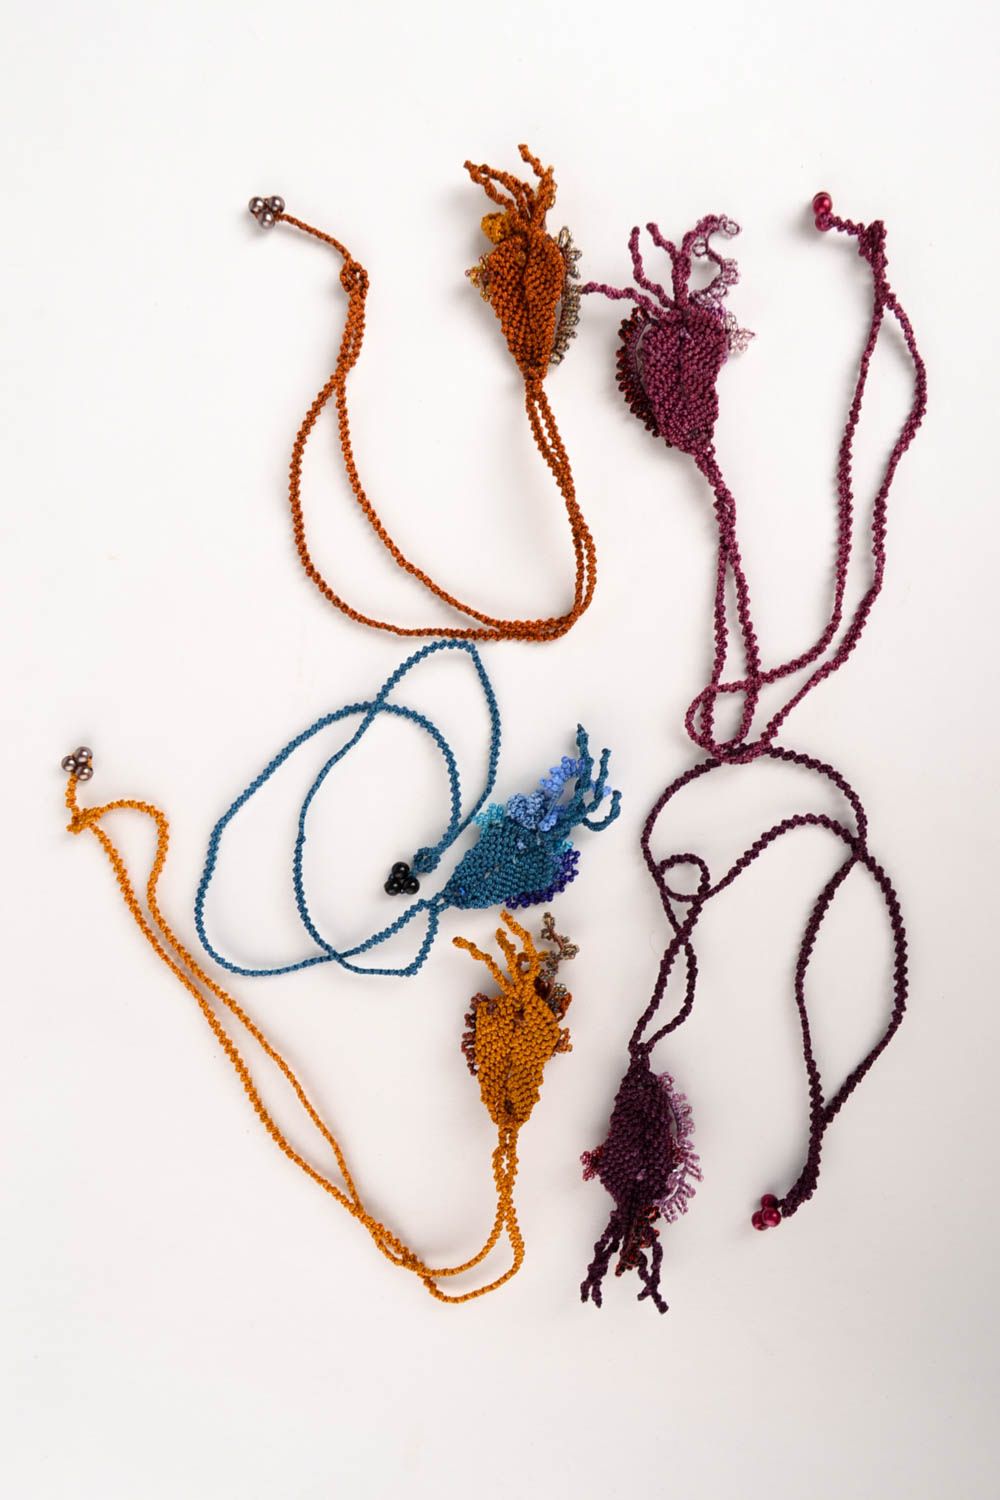 Handmade pendant fashion thread jewelry 5 pieces gift for women macrame ideas photo 4